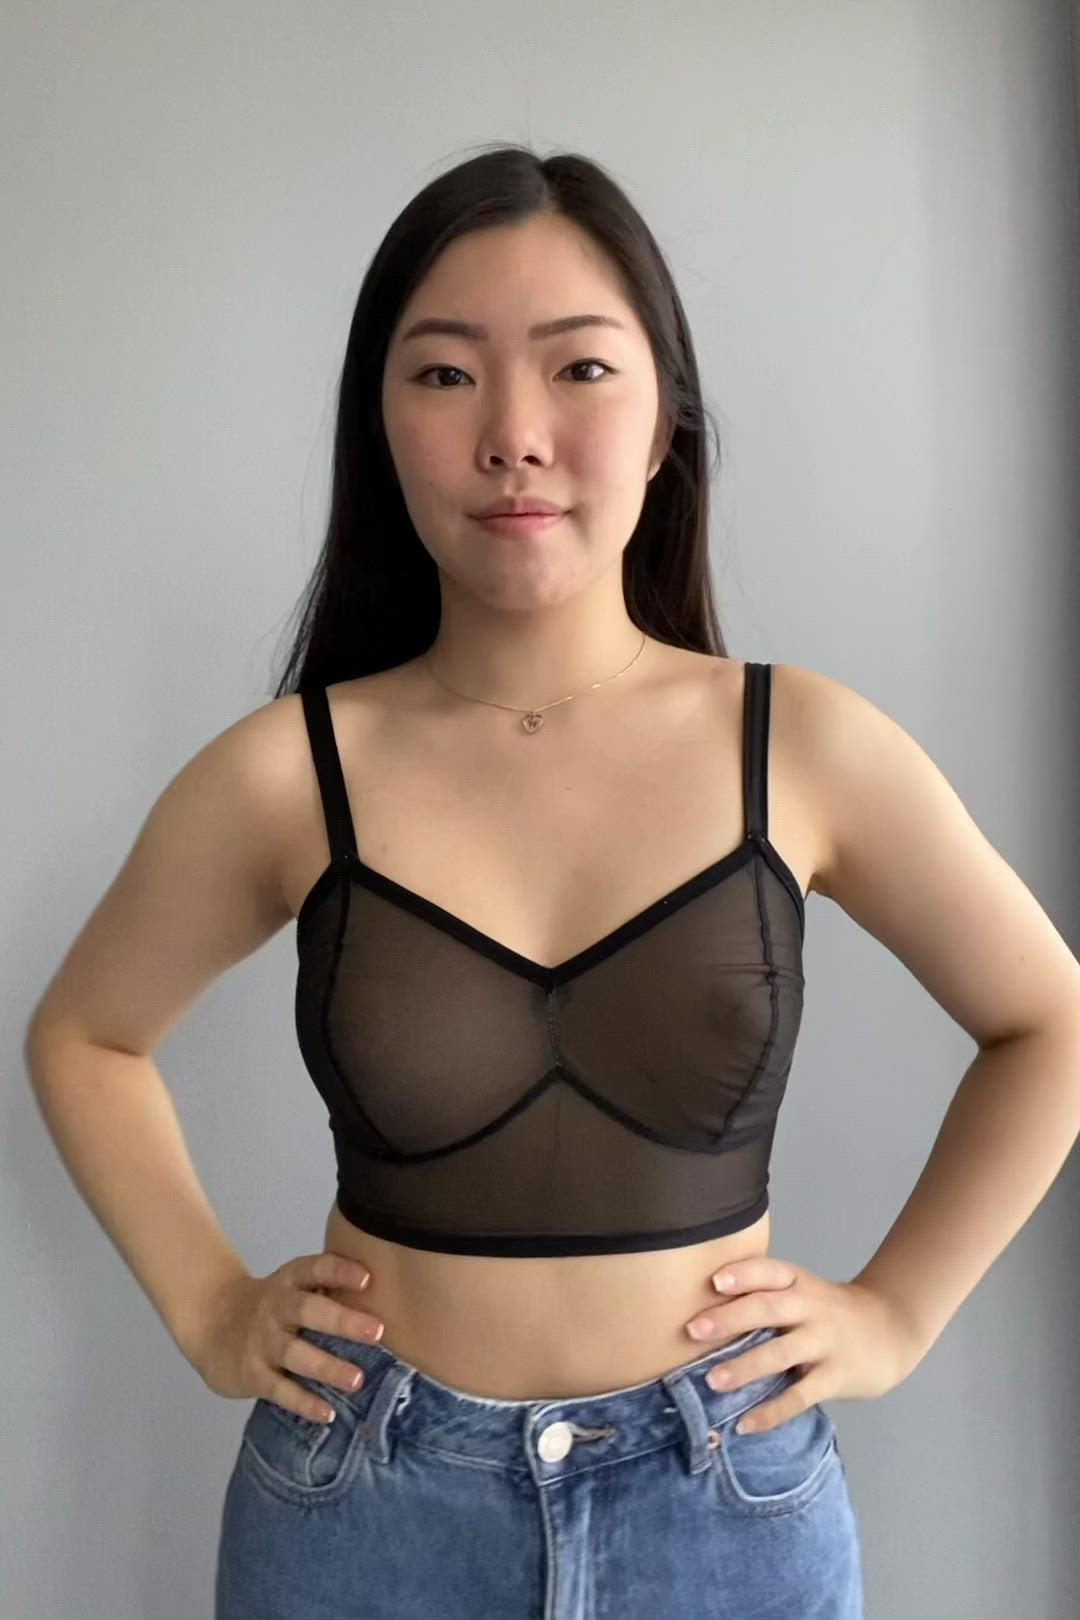 Rubies Bras client and model wearing a black minimal sheer custom made bra